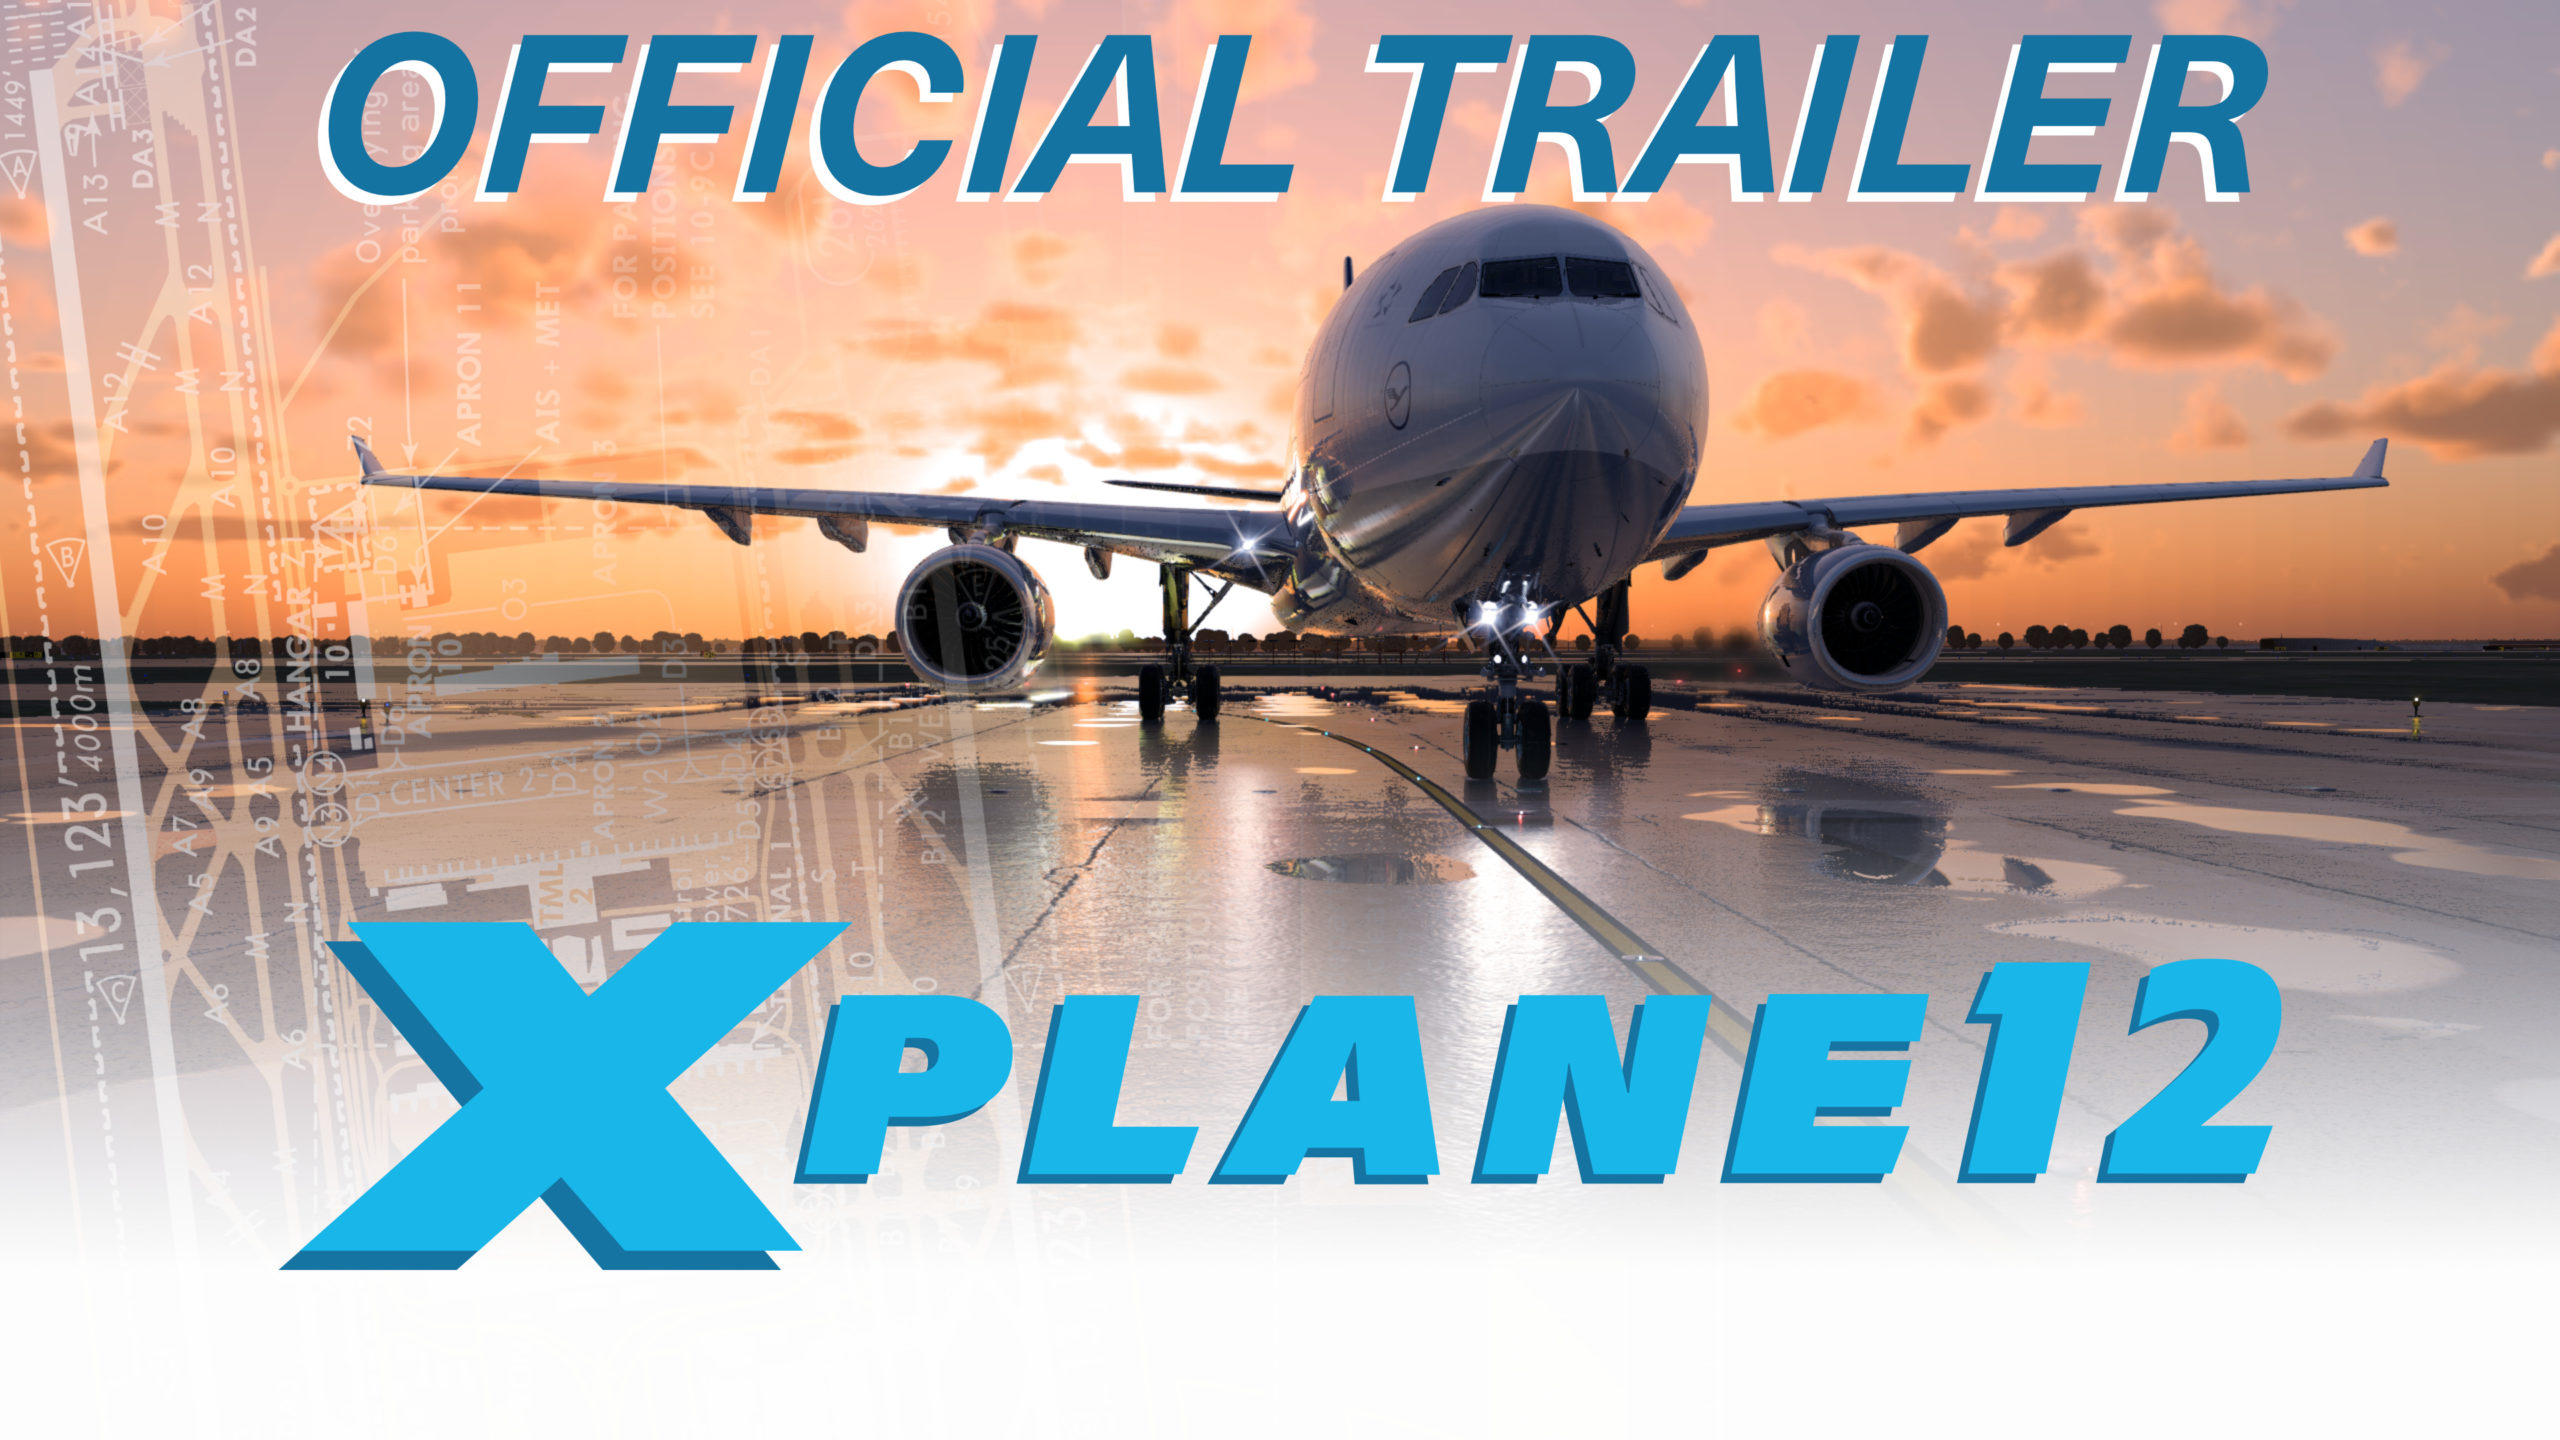 x plane 11 full version key free